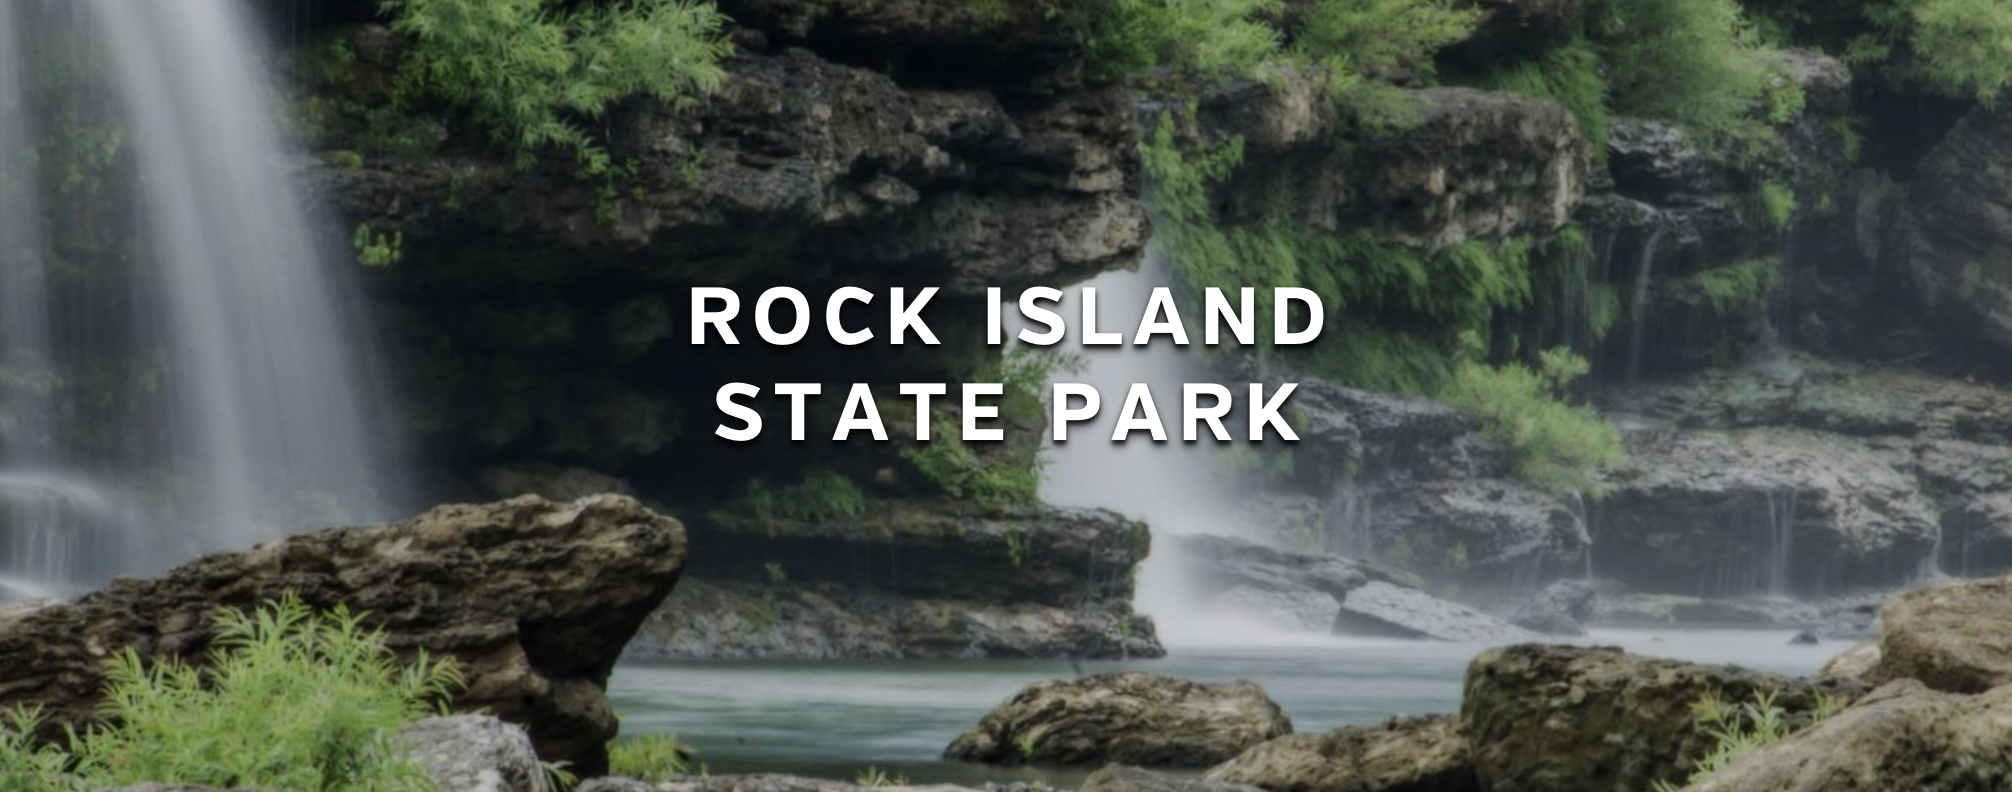 Rock Island State Park Campground